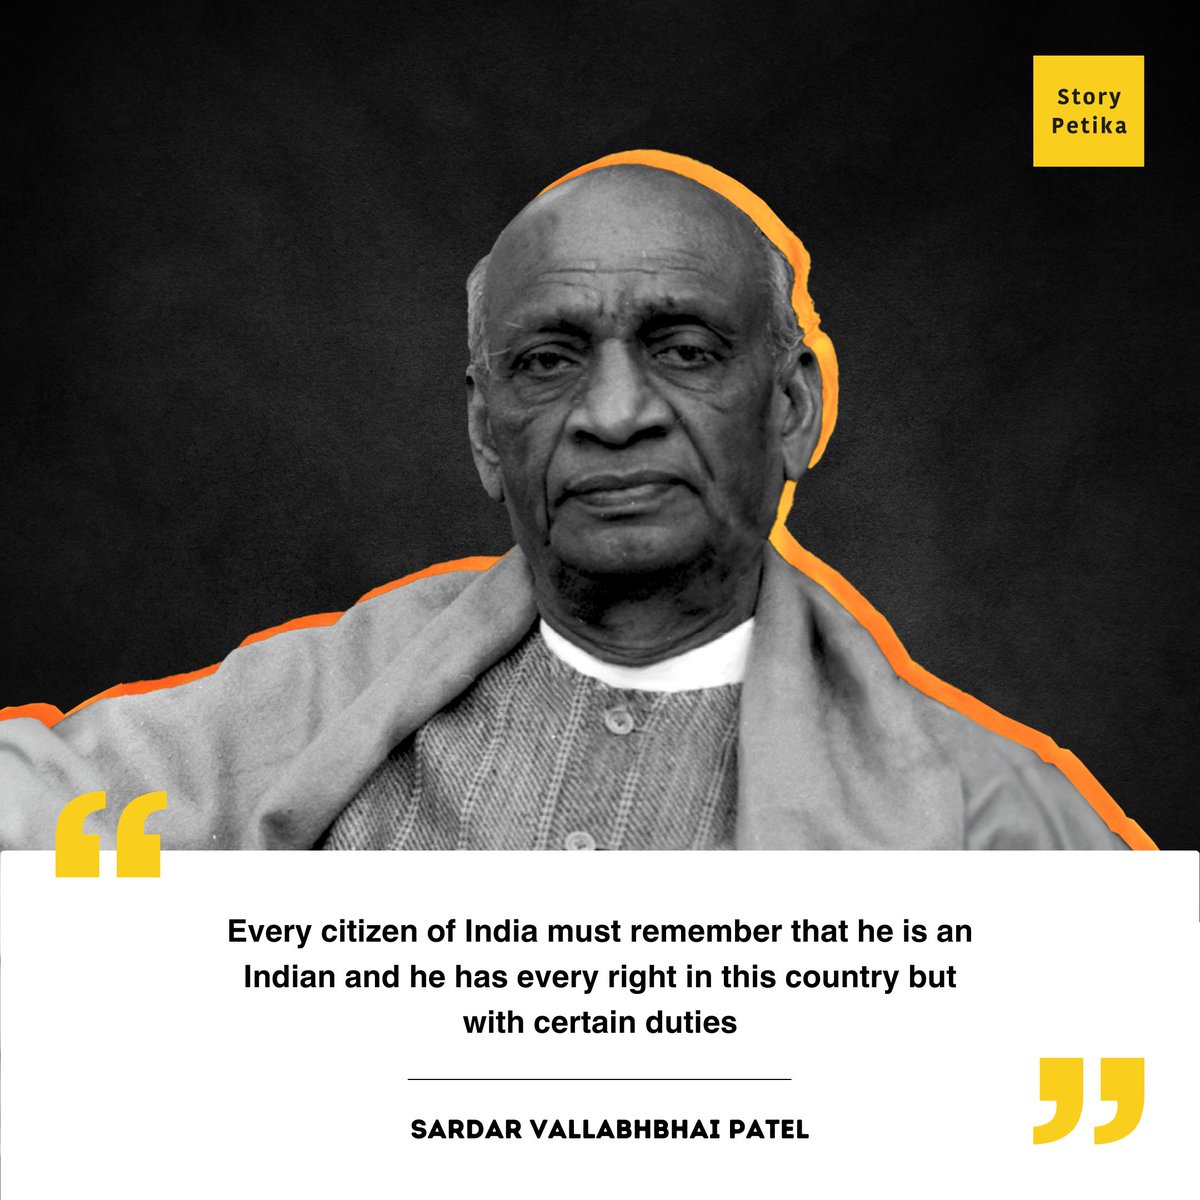 Sardar Patel's words

#sardarvallabhbhaipatel #patel #indianpride #indianhero #IndianHistory #indianindependence #india #india #knowyourcountry #knowindia #upsc #upscexam #aspirants #pcs #govtjobs #government #duties #freedom